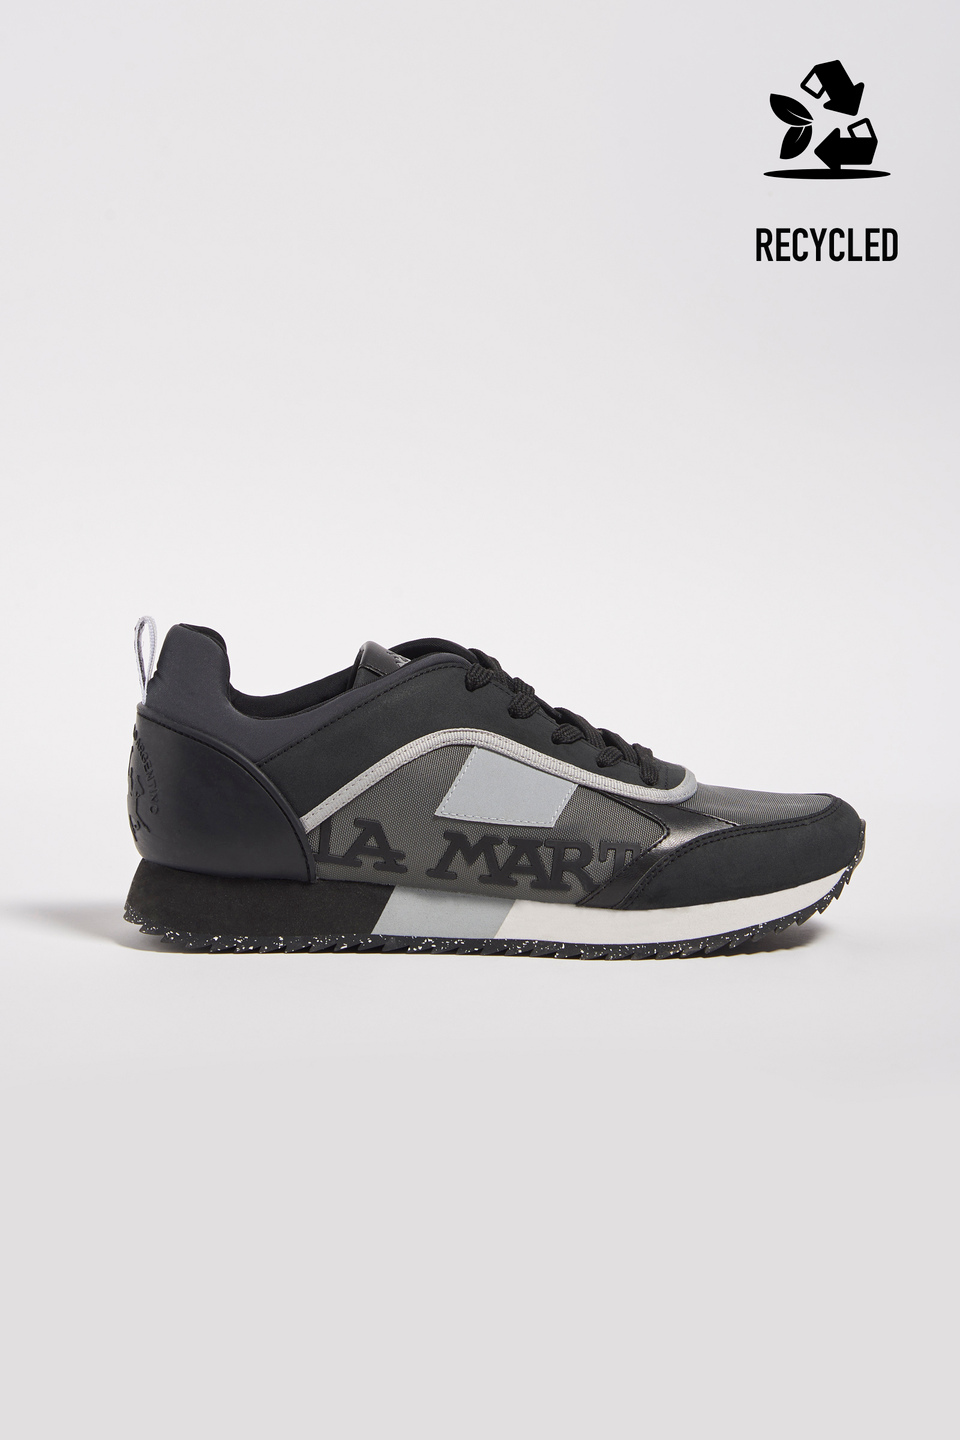 Sneaker in nabuk e cordura bicolor | La Martina - Official Online Shop